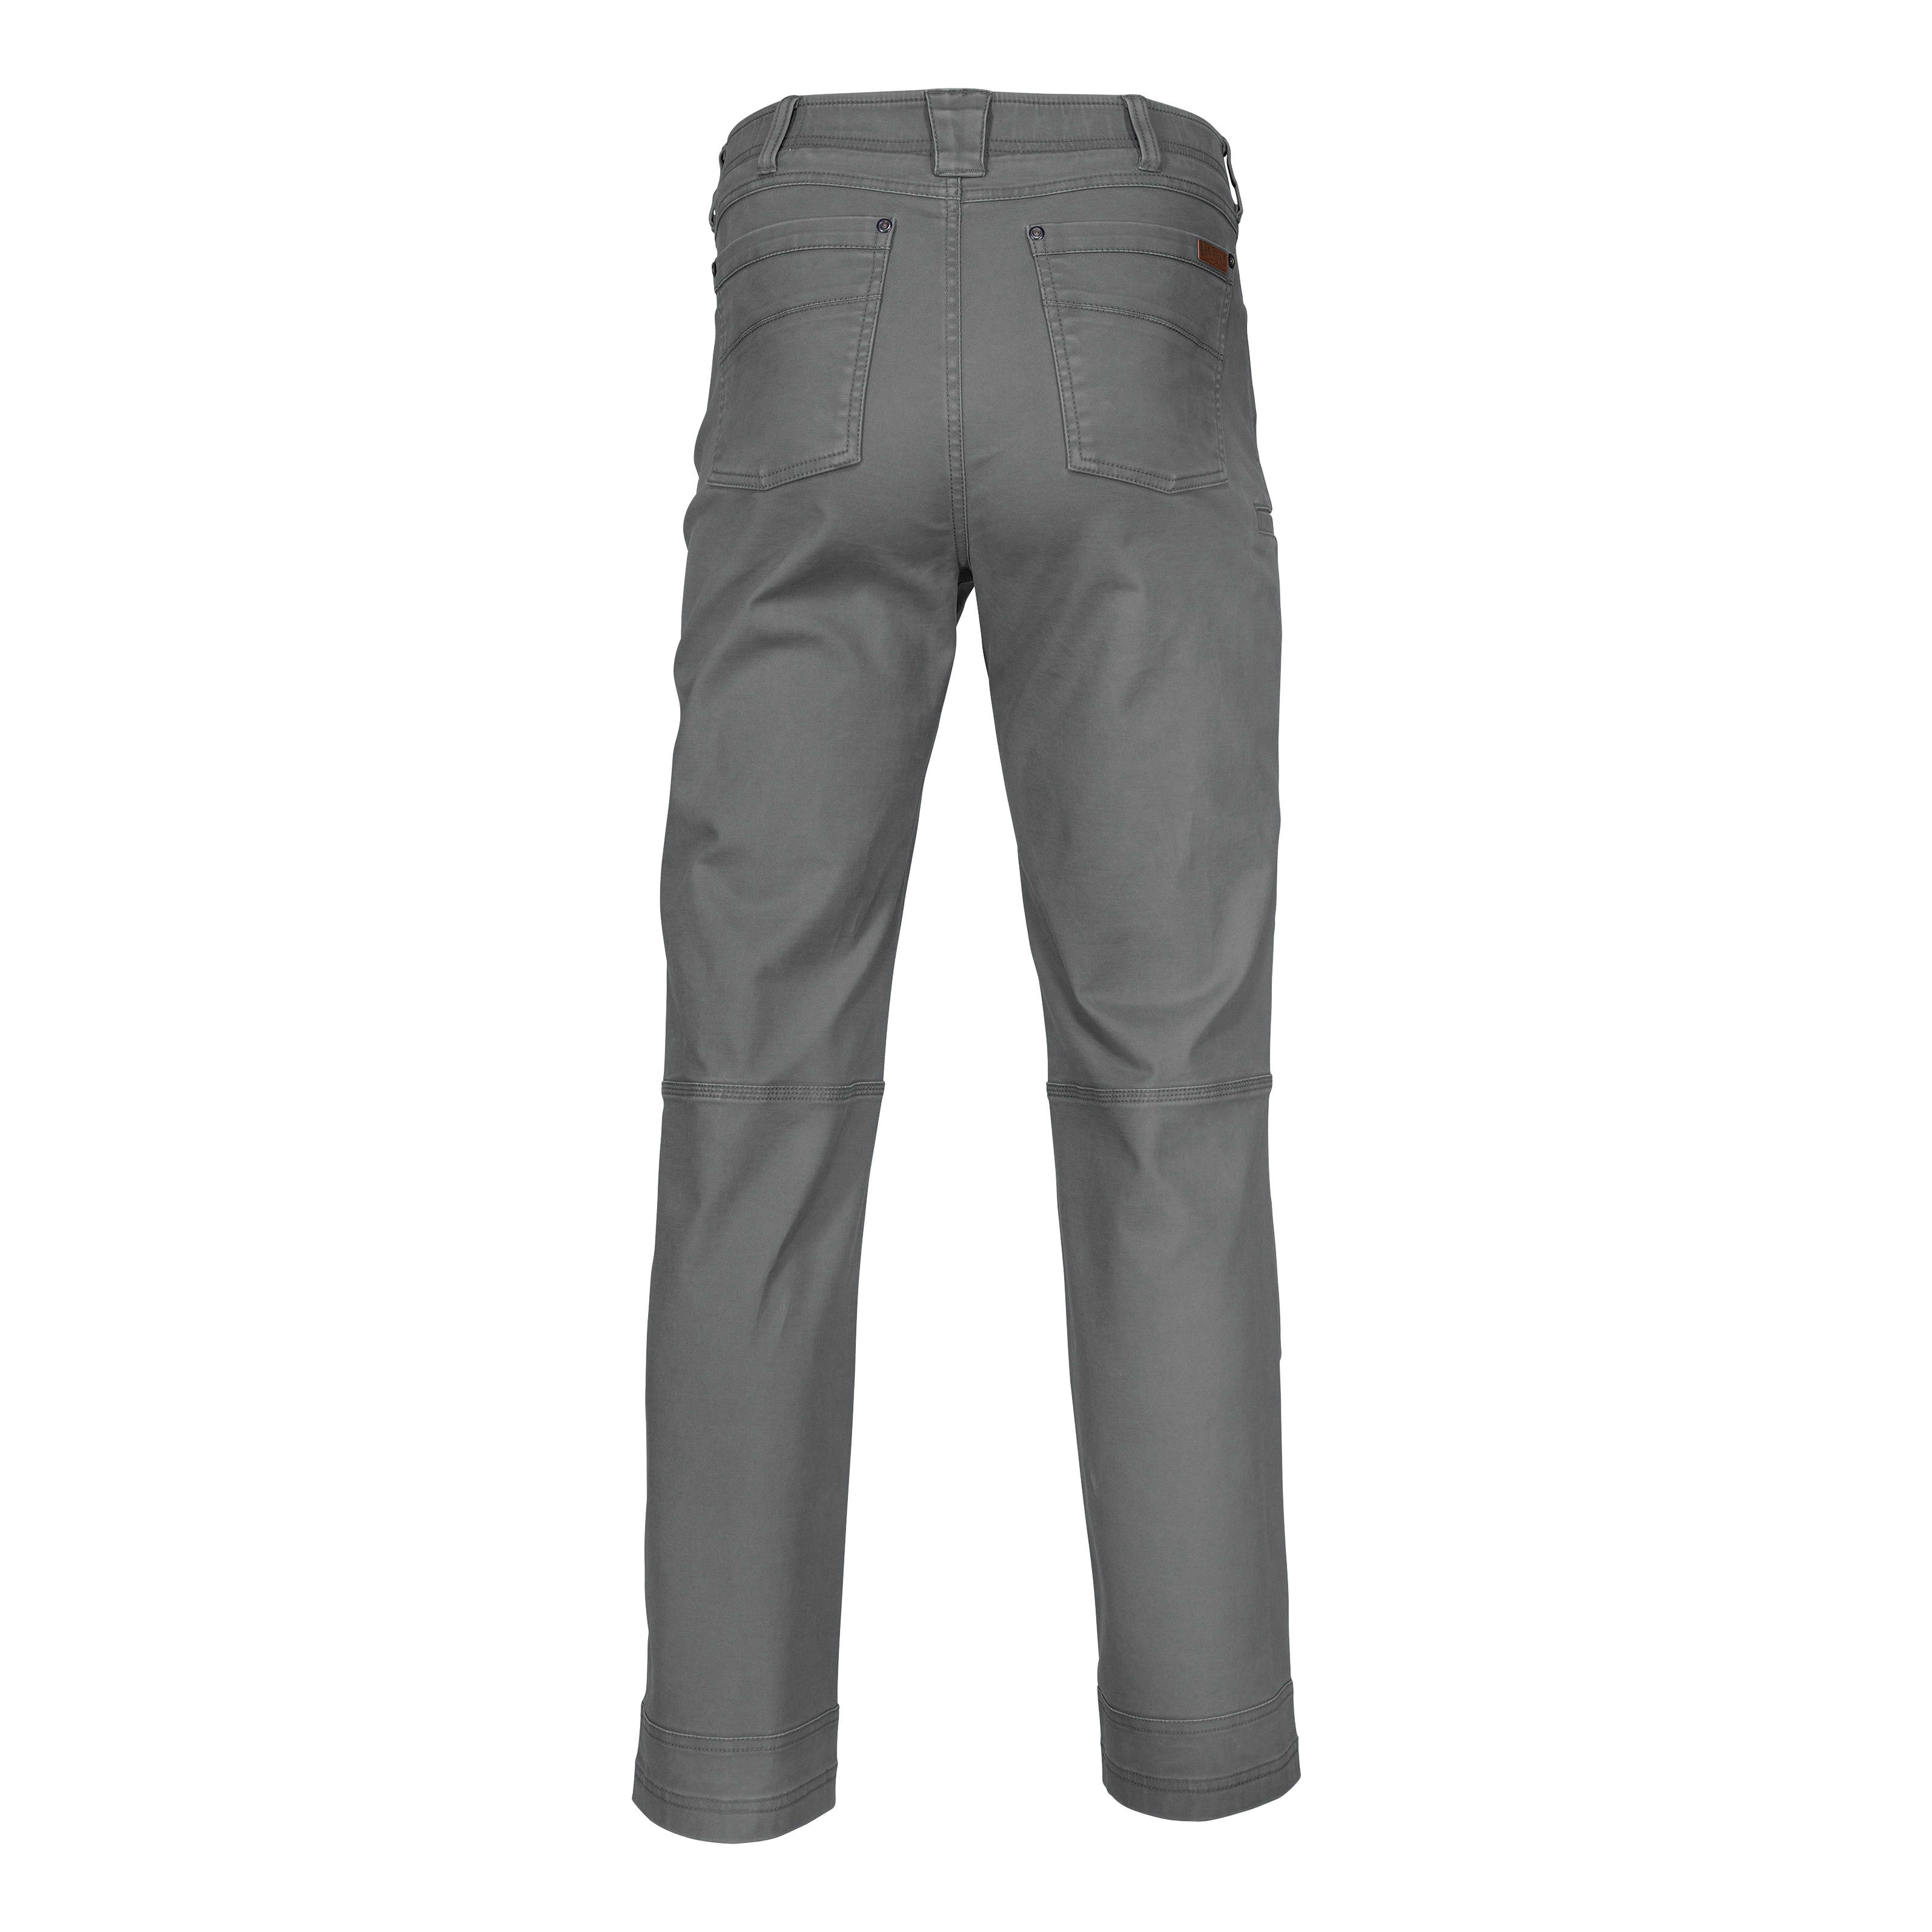 Microfiber unisex kitchen pants 4102 — Maxport Costumes for Work